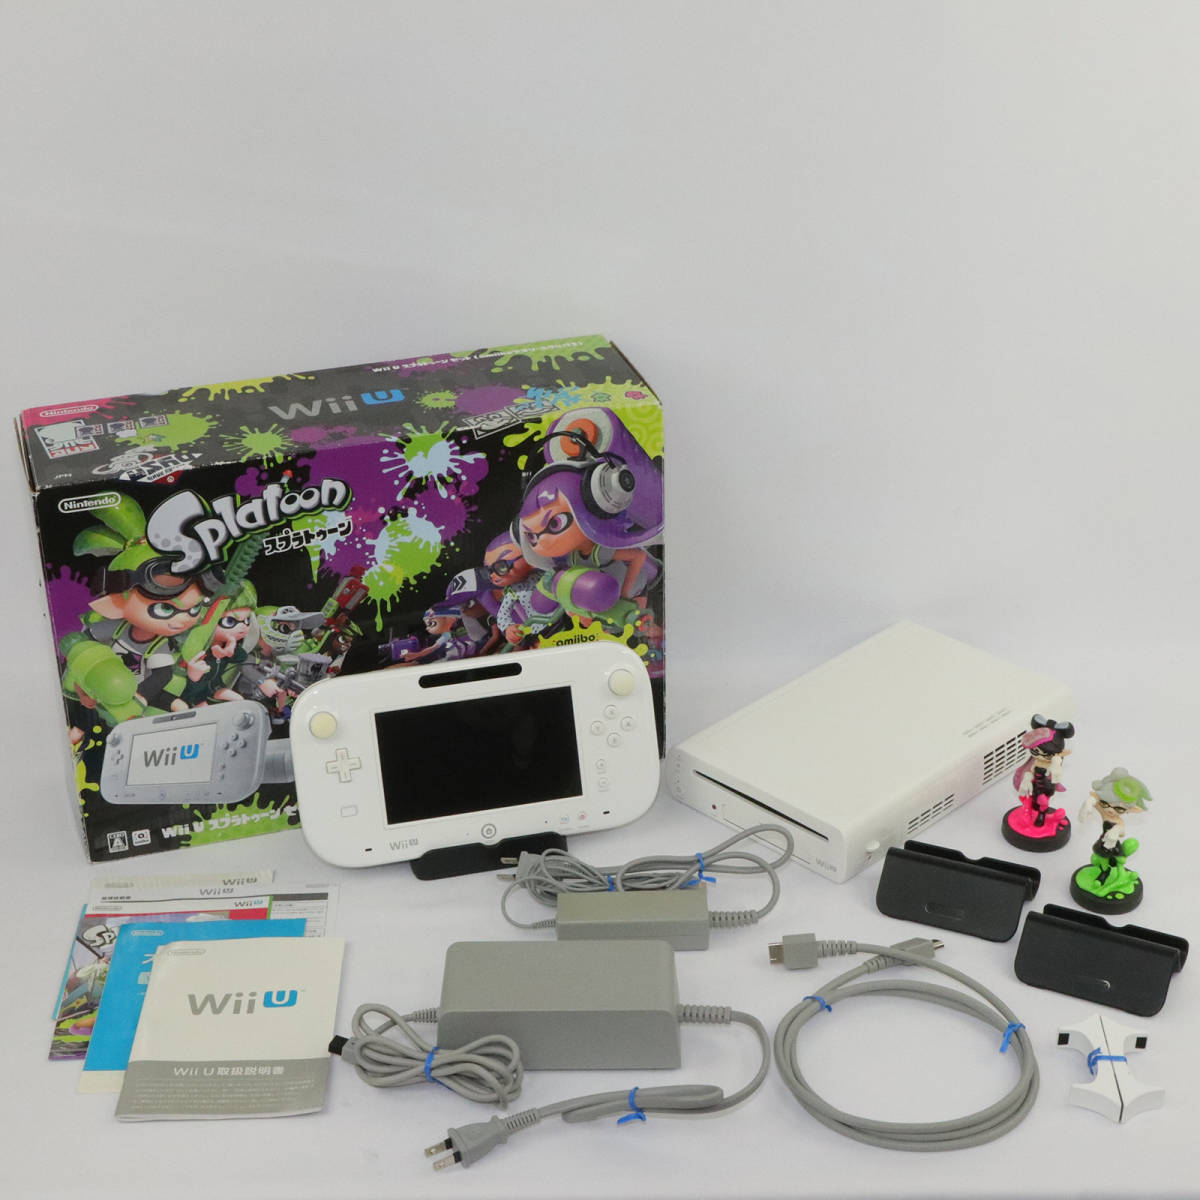 Sale 10 Off 美品 アミーボ付属 Wii U スプラトゥーン セット Amiibo アオリ ホタル付き Wiiu本体 Xtremedisplay Ca